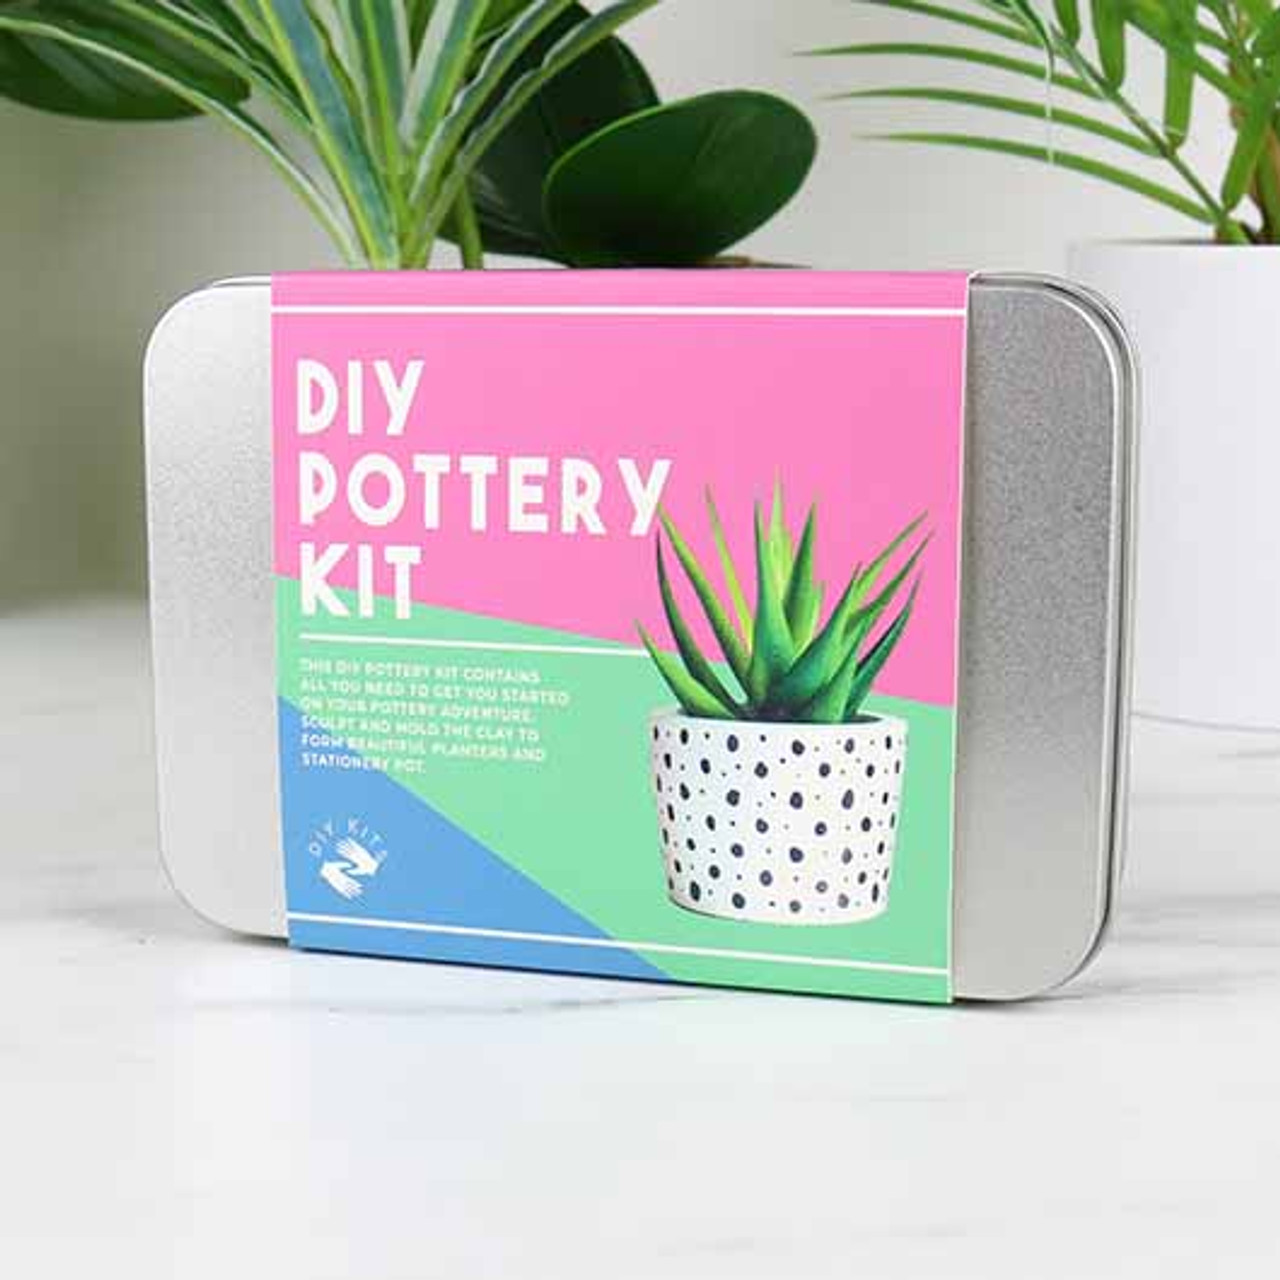 You're My Favorite' Pottery Kit